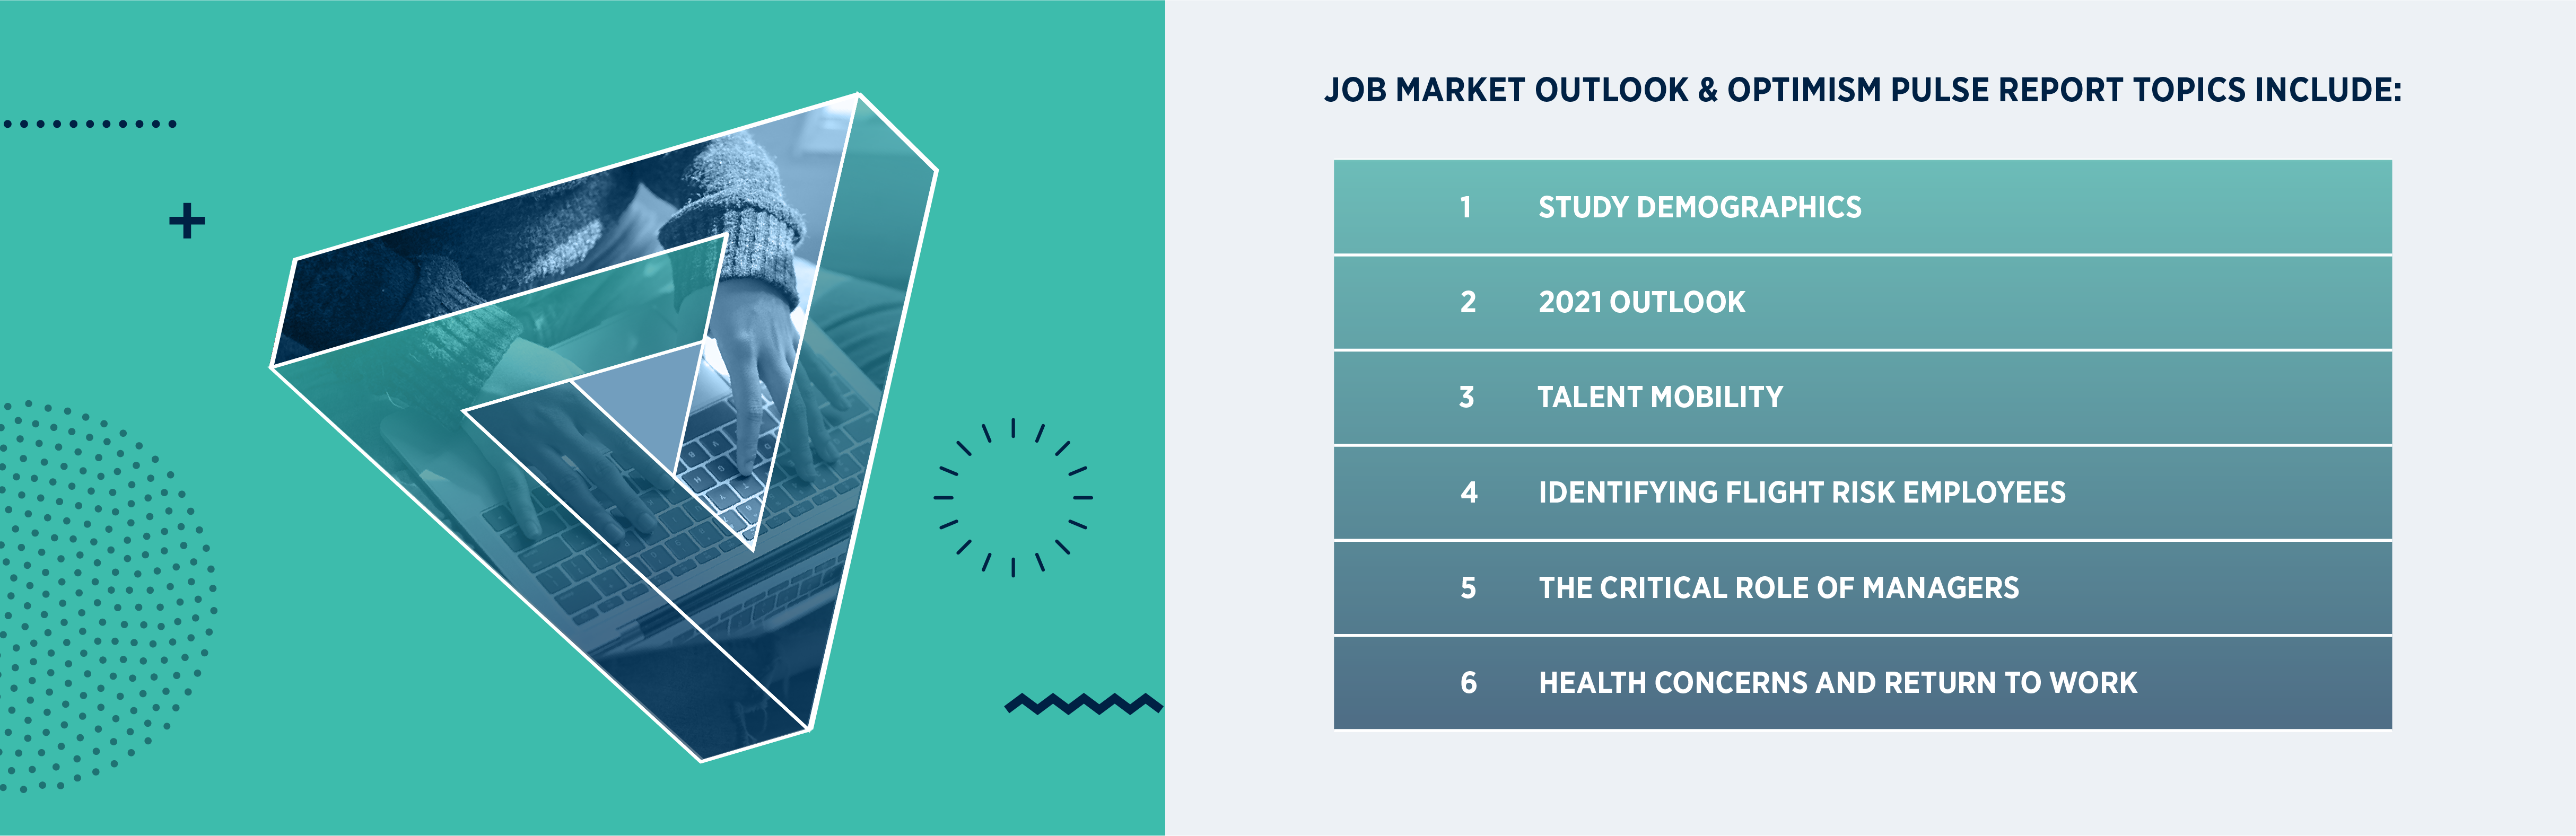 Job Market Report Table of Contents 